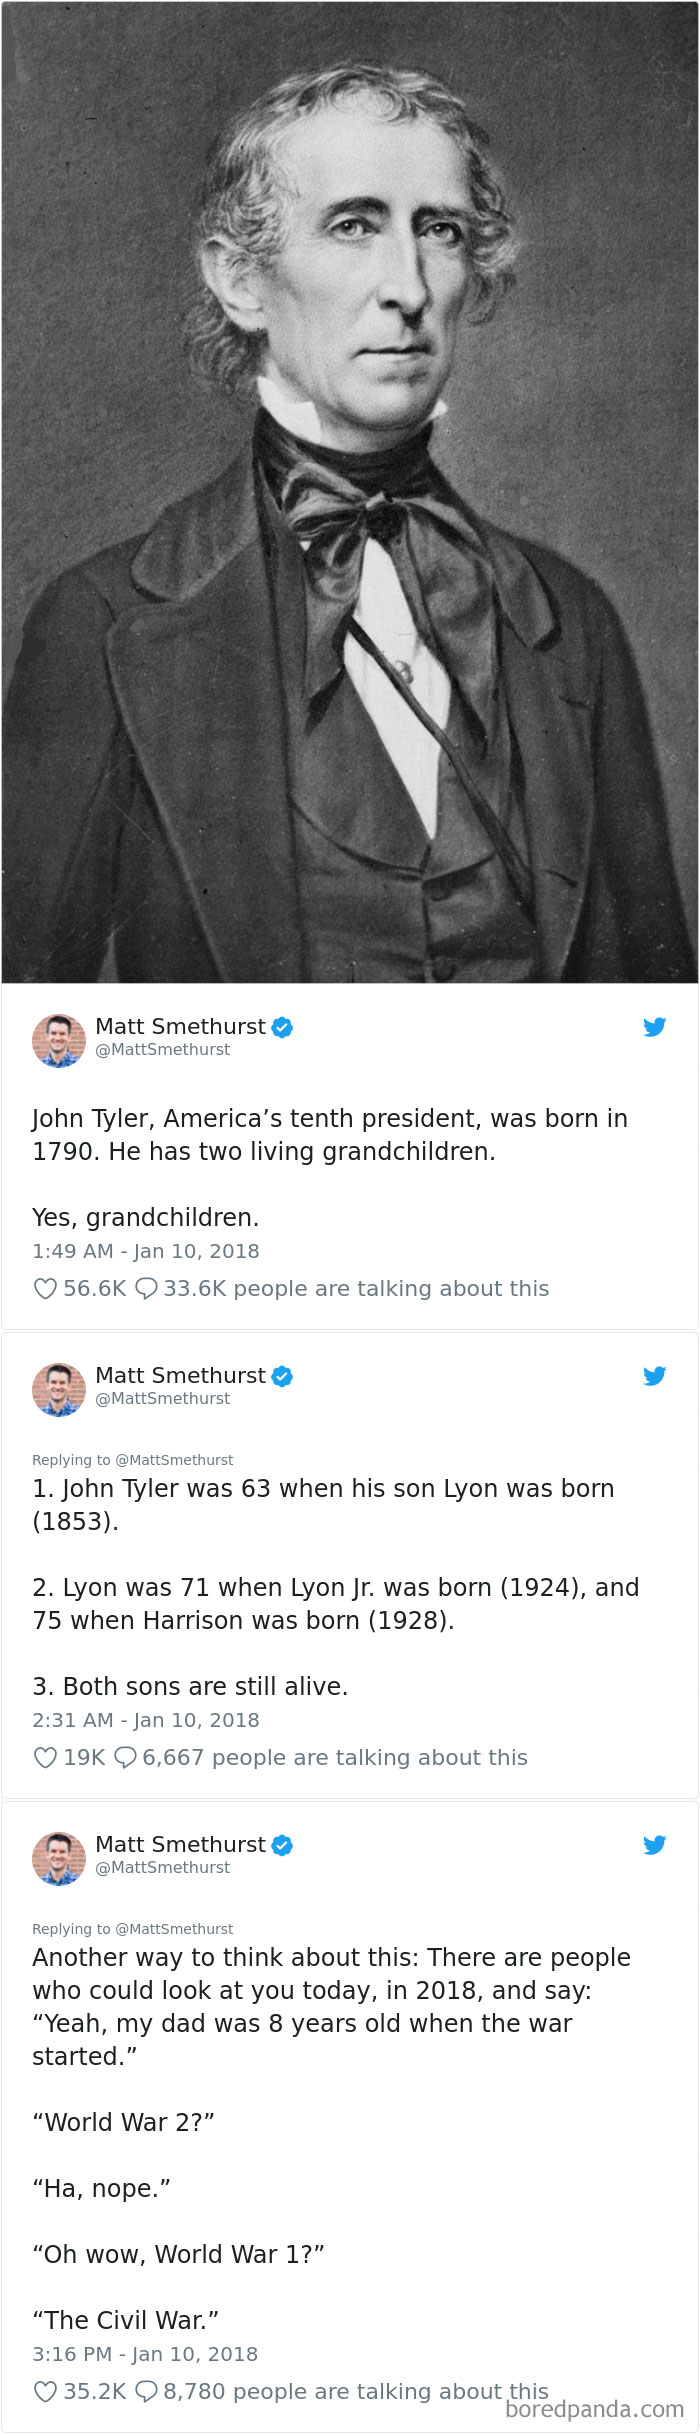 John Tyler, America's Tenth President, Was Born In 1790. He Has Two Living Grandchildren. So This Means...